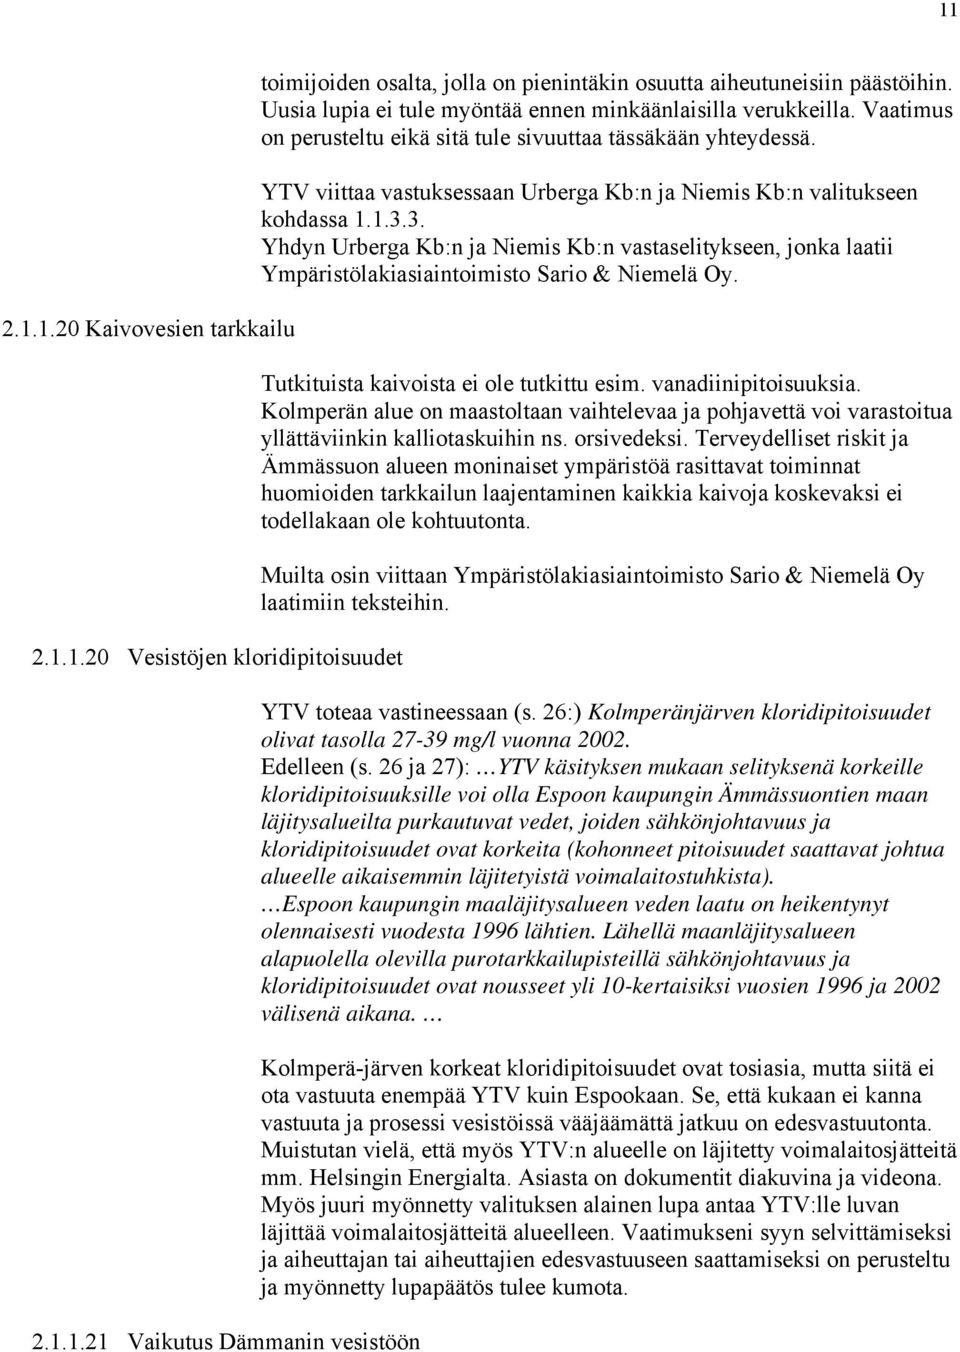 YTV viittaa vastuksessaan Urberga Kb:n ja Niemis Kb:n valitukseen kohdassa 1.1.3.3. Yhdyn Urberga Kb:n ja Niemis Kb:n vastaselitykseen, jonka laatii Ympäristölakiasiaintoimisto Sario & Niemelä Oy.